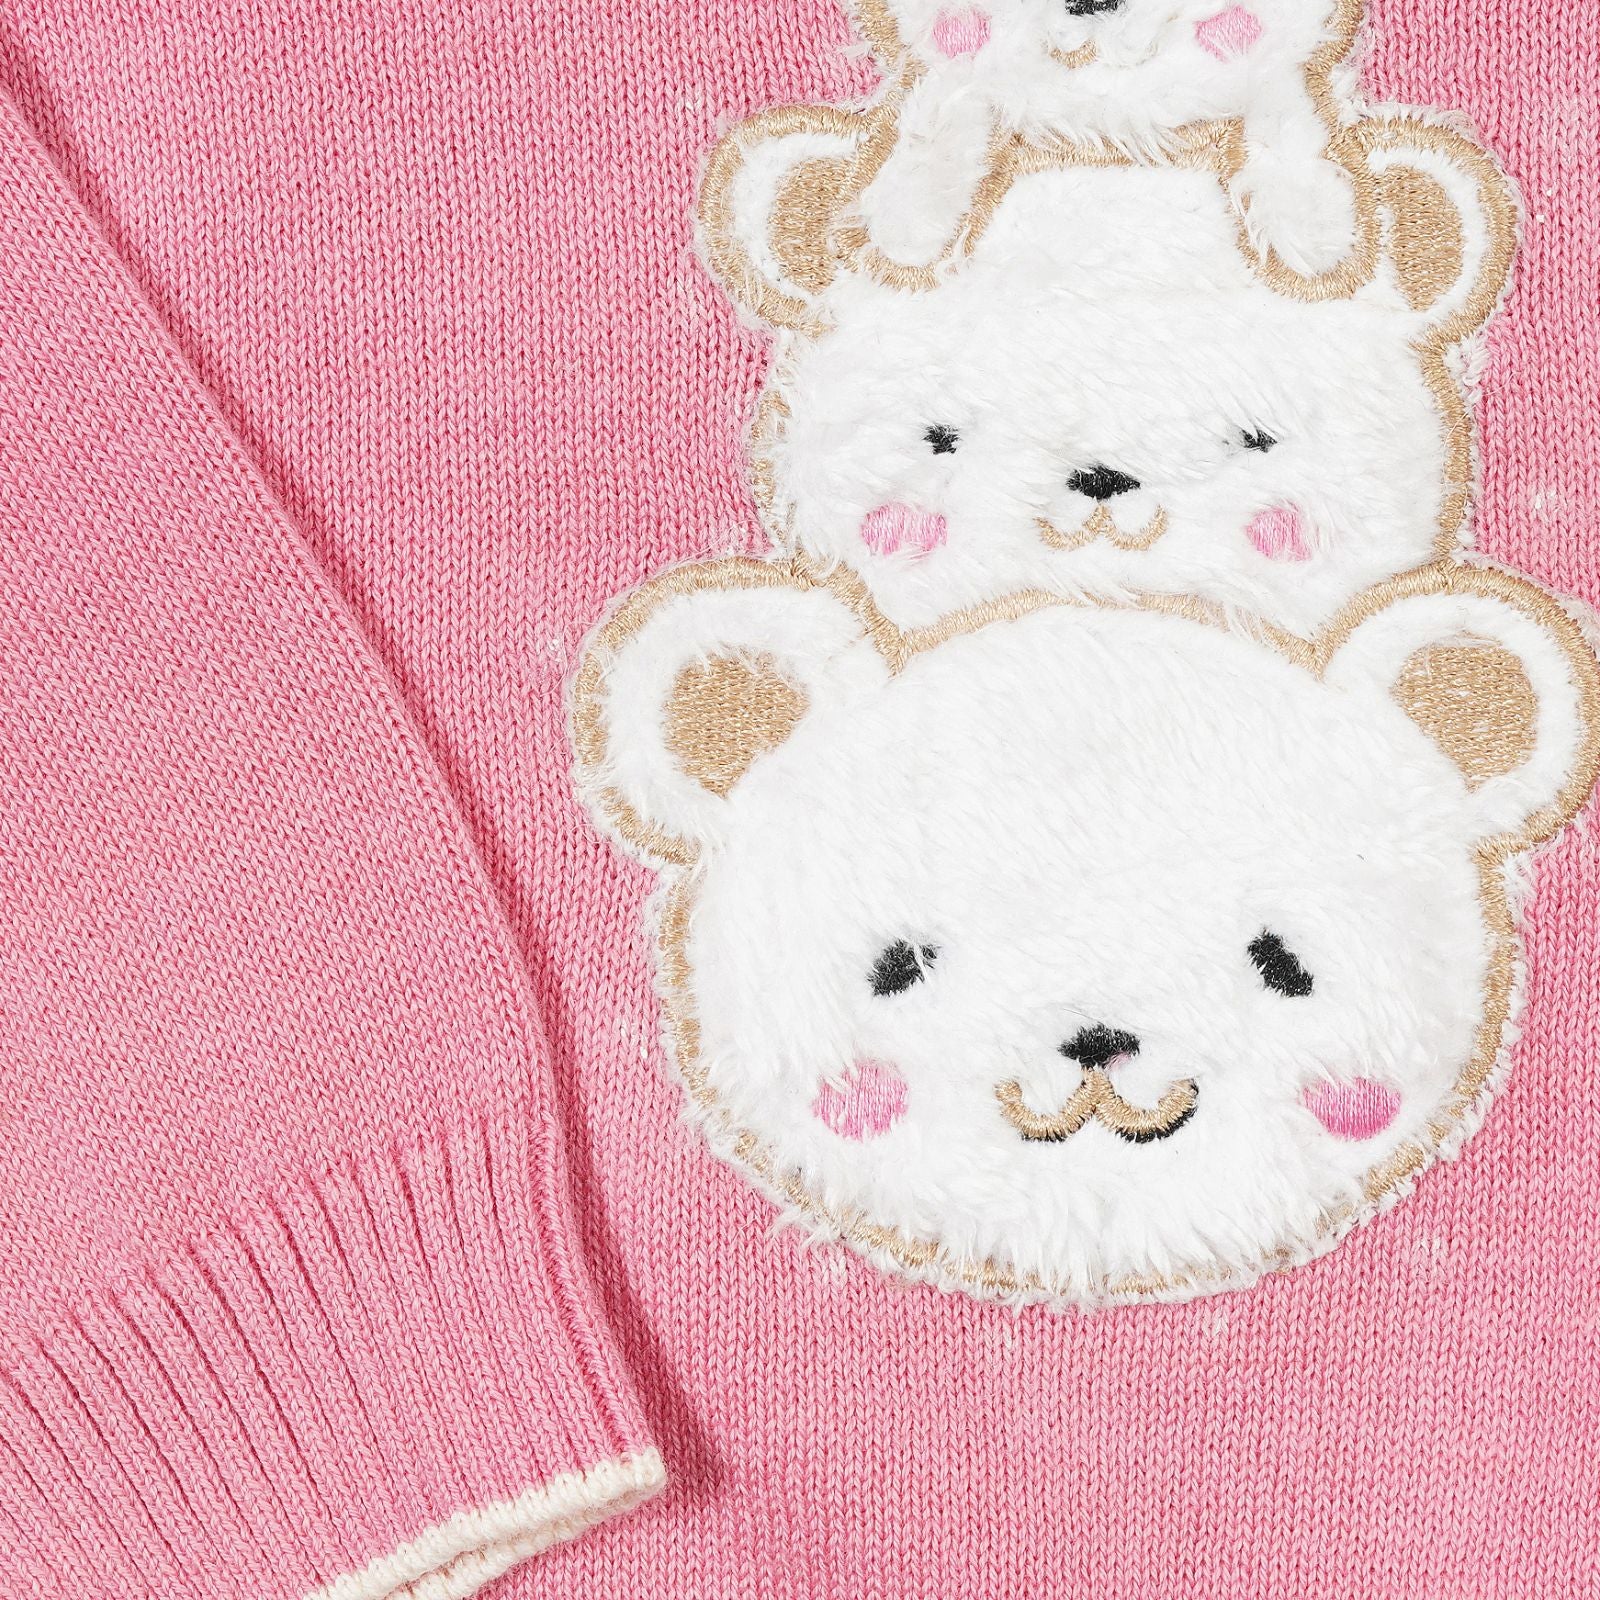 Adorable Bear Family  Sweater - Melange Pink